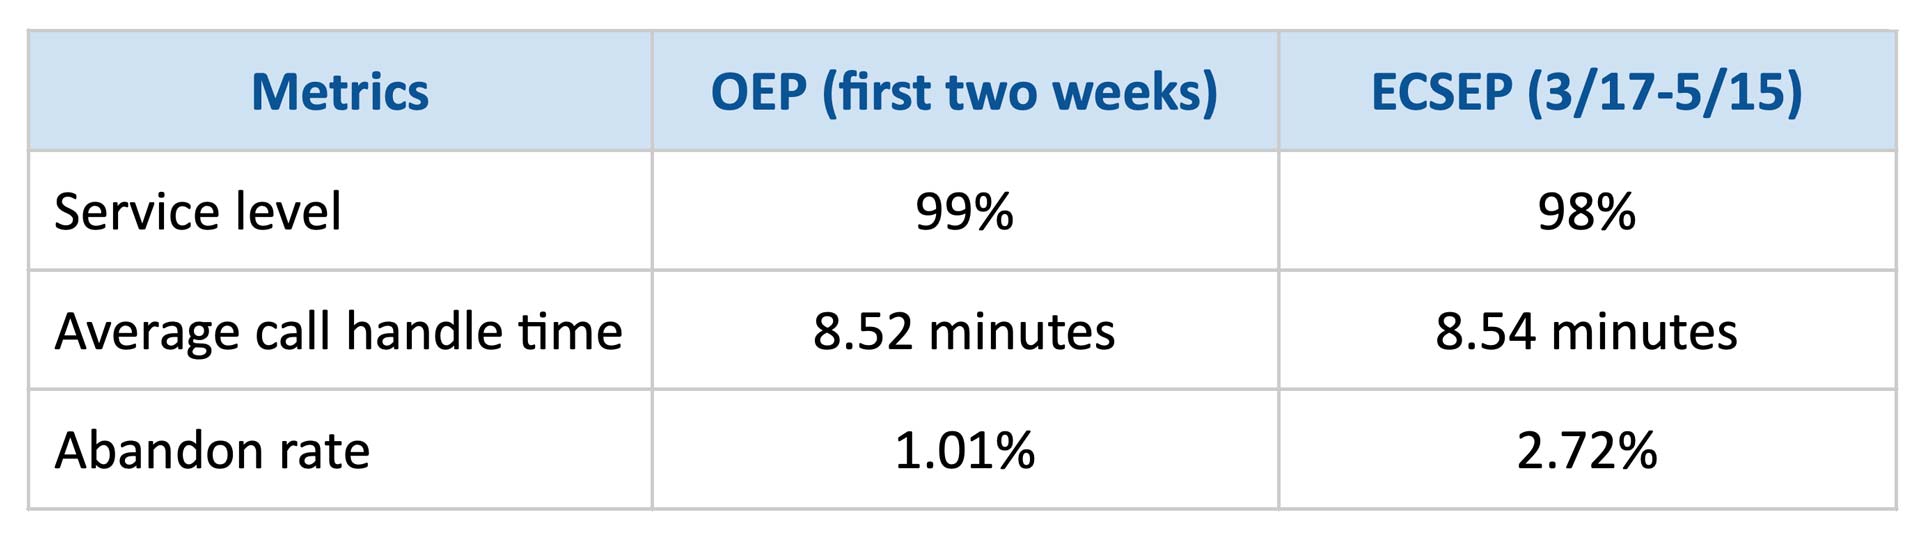 Comparison of Metrics Between OEP and the ECSEP